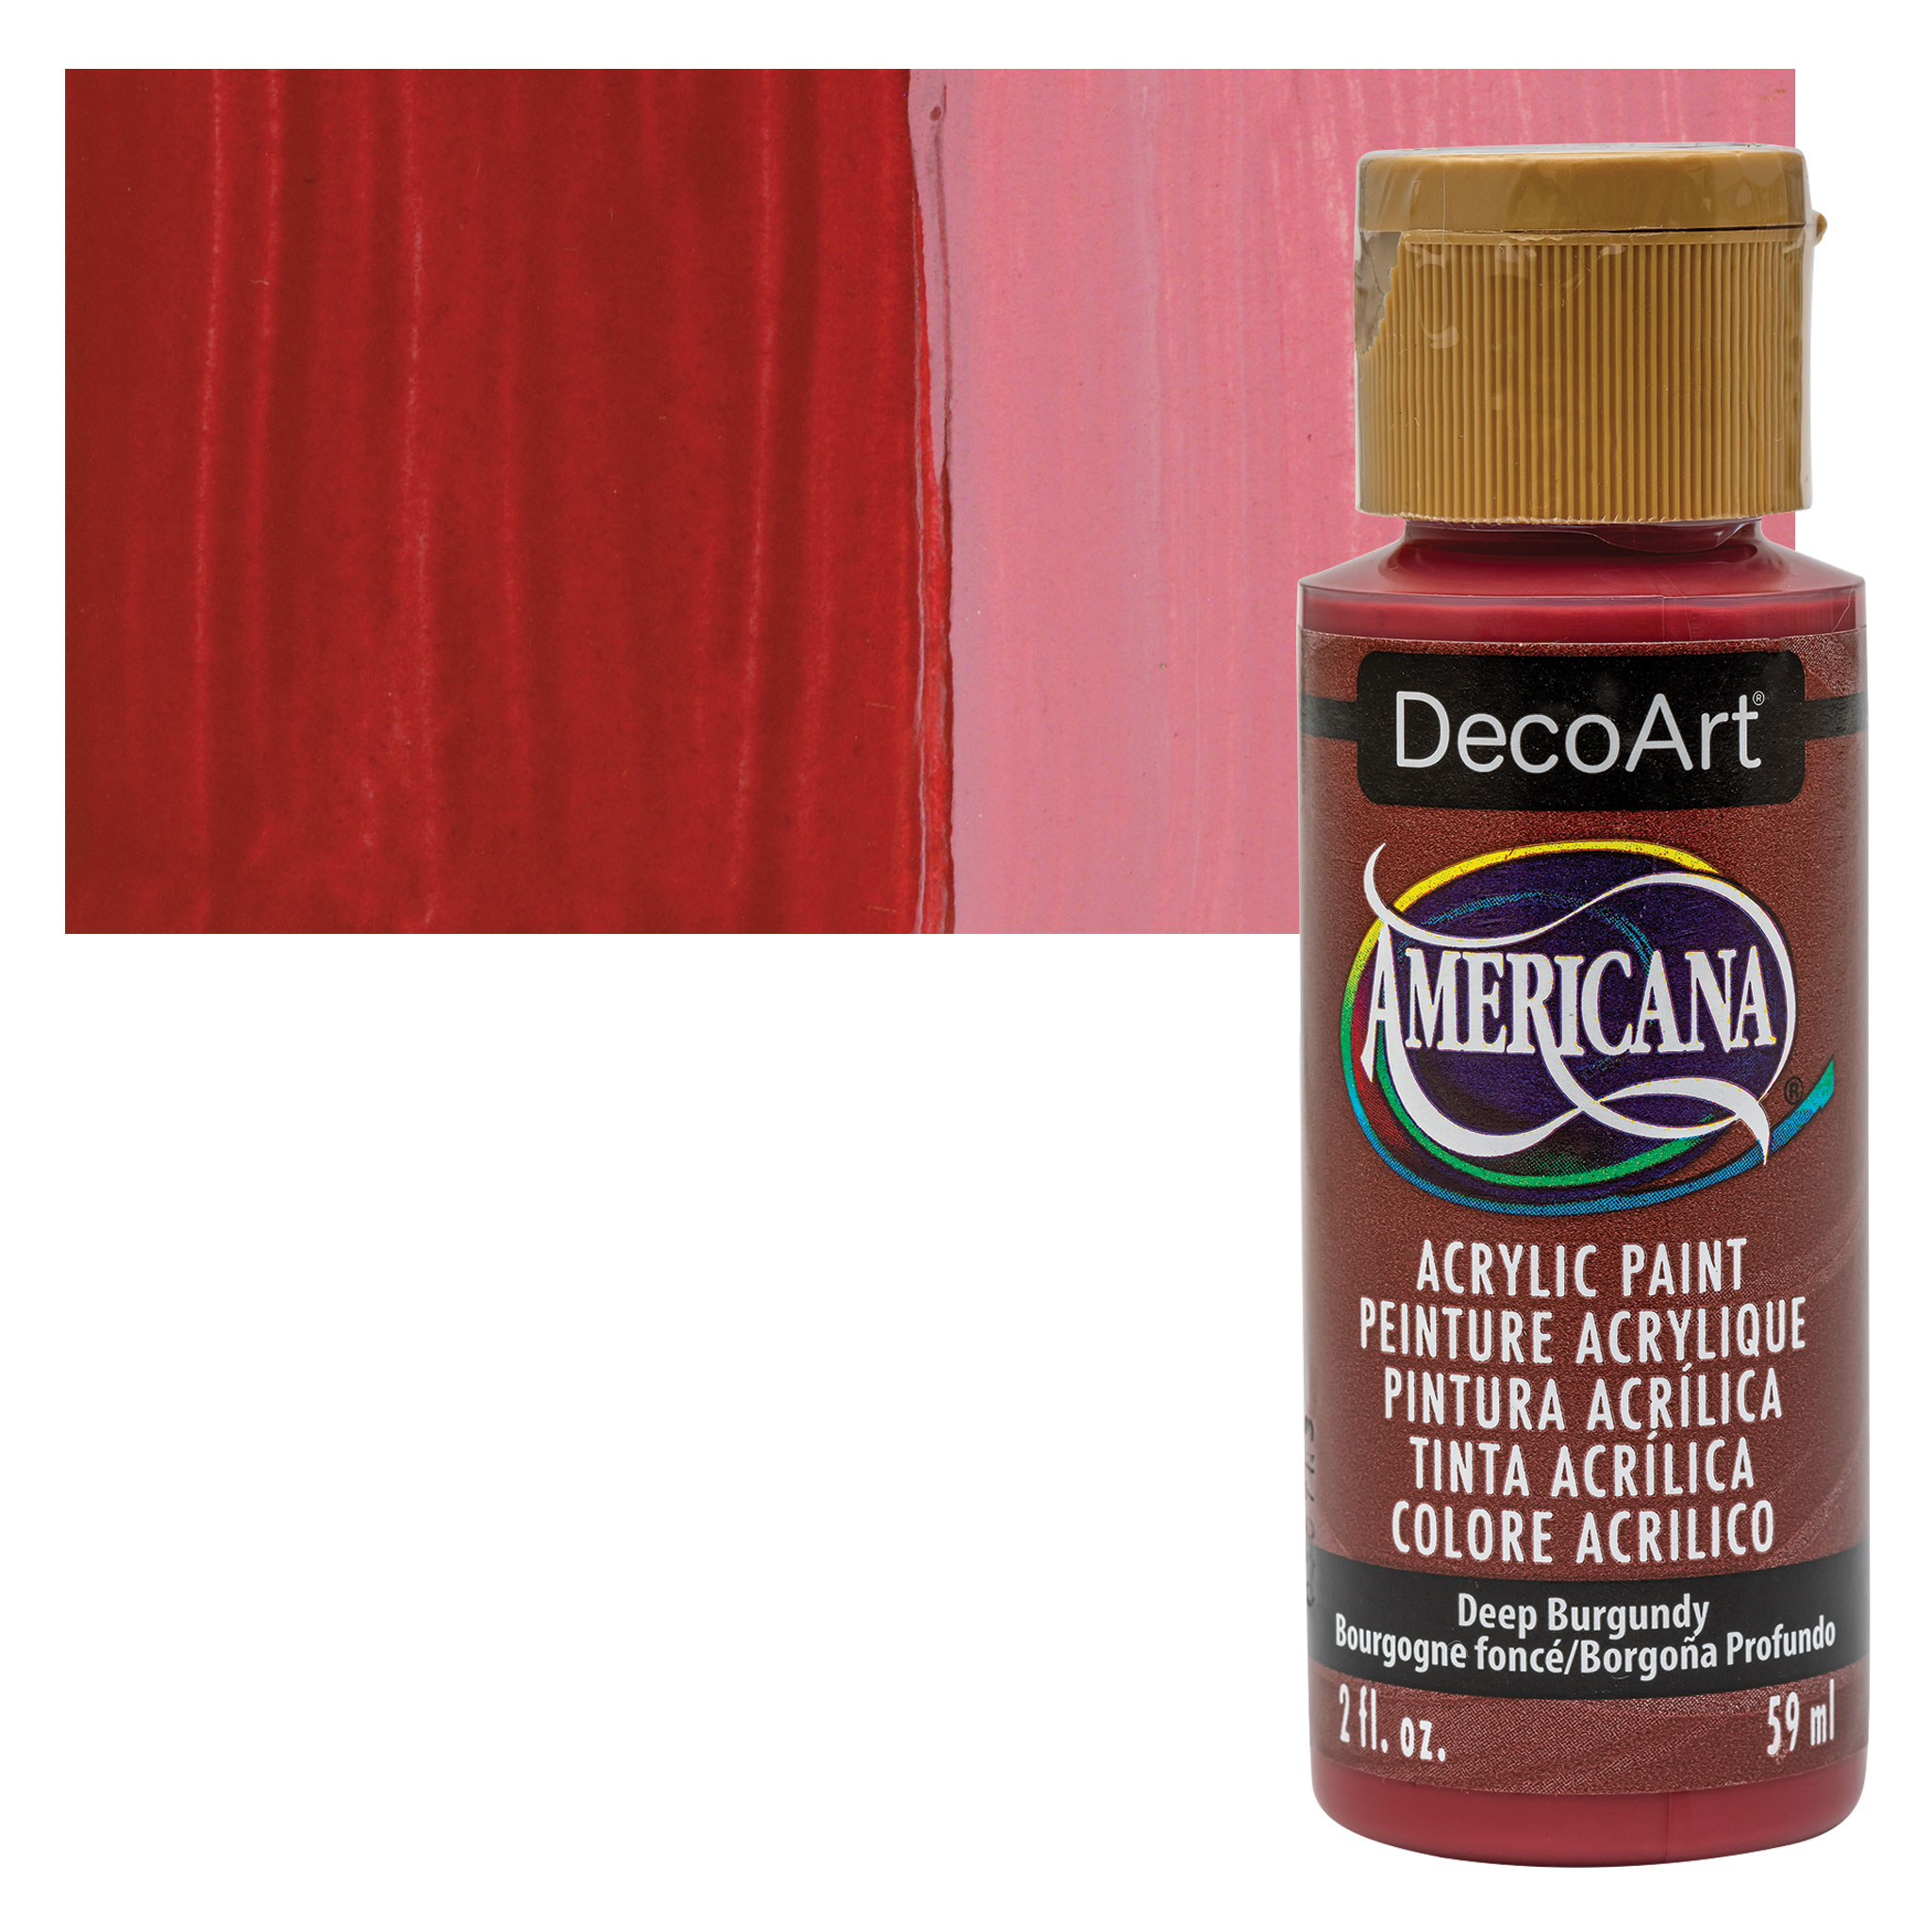 DecoArt Americana Acrylic Paint 2oz-Antique Maroon - Opaque, 1